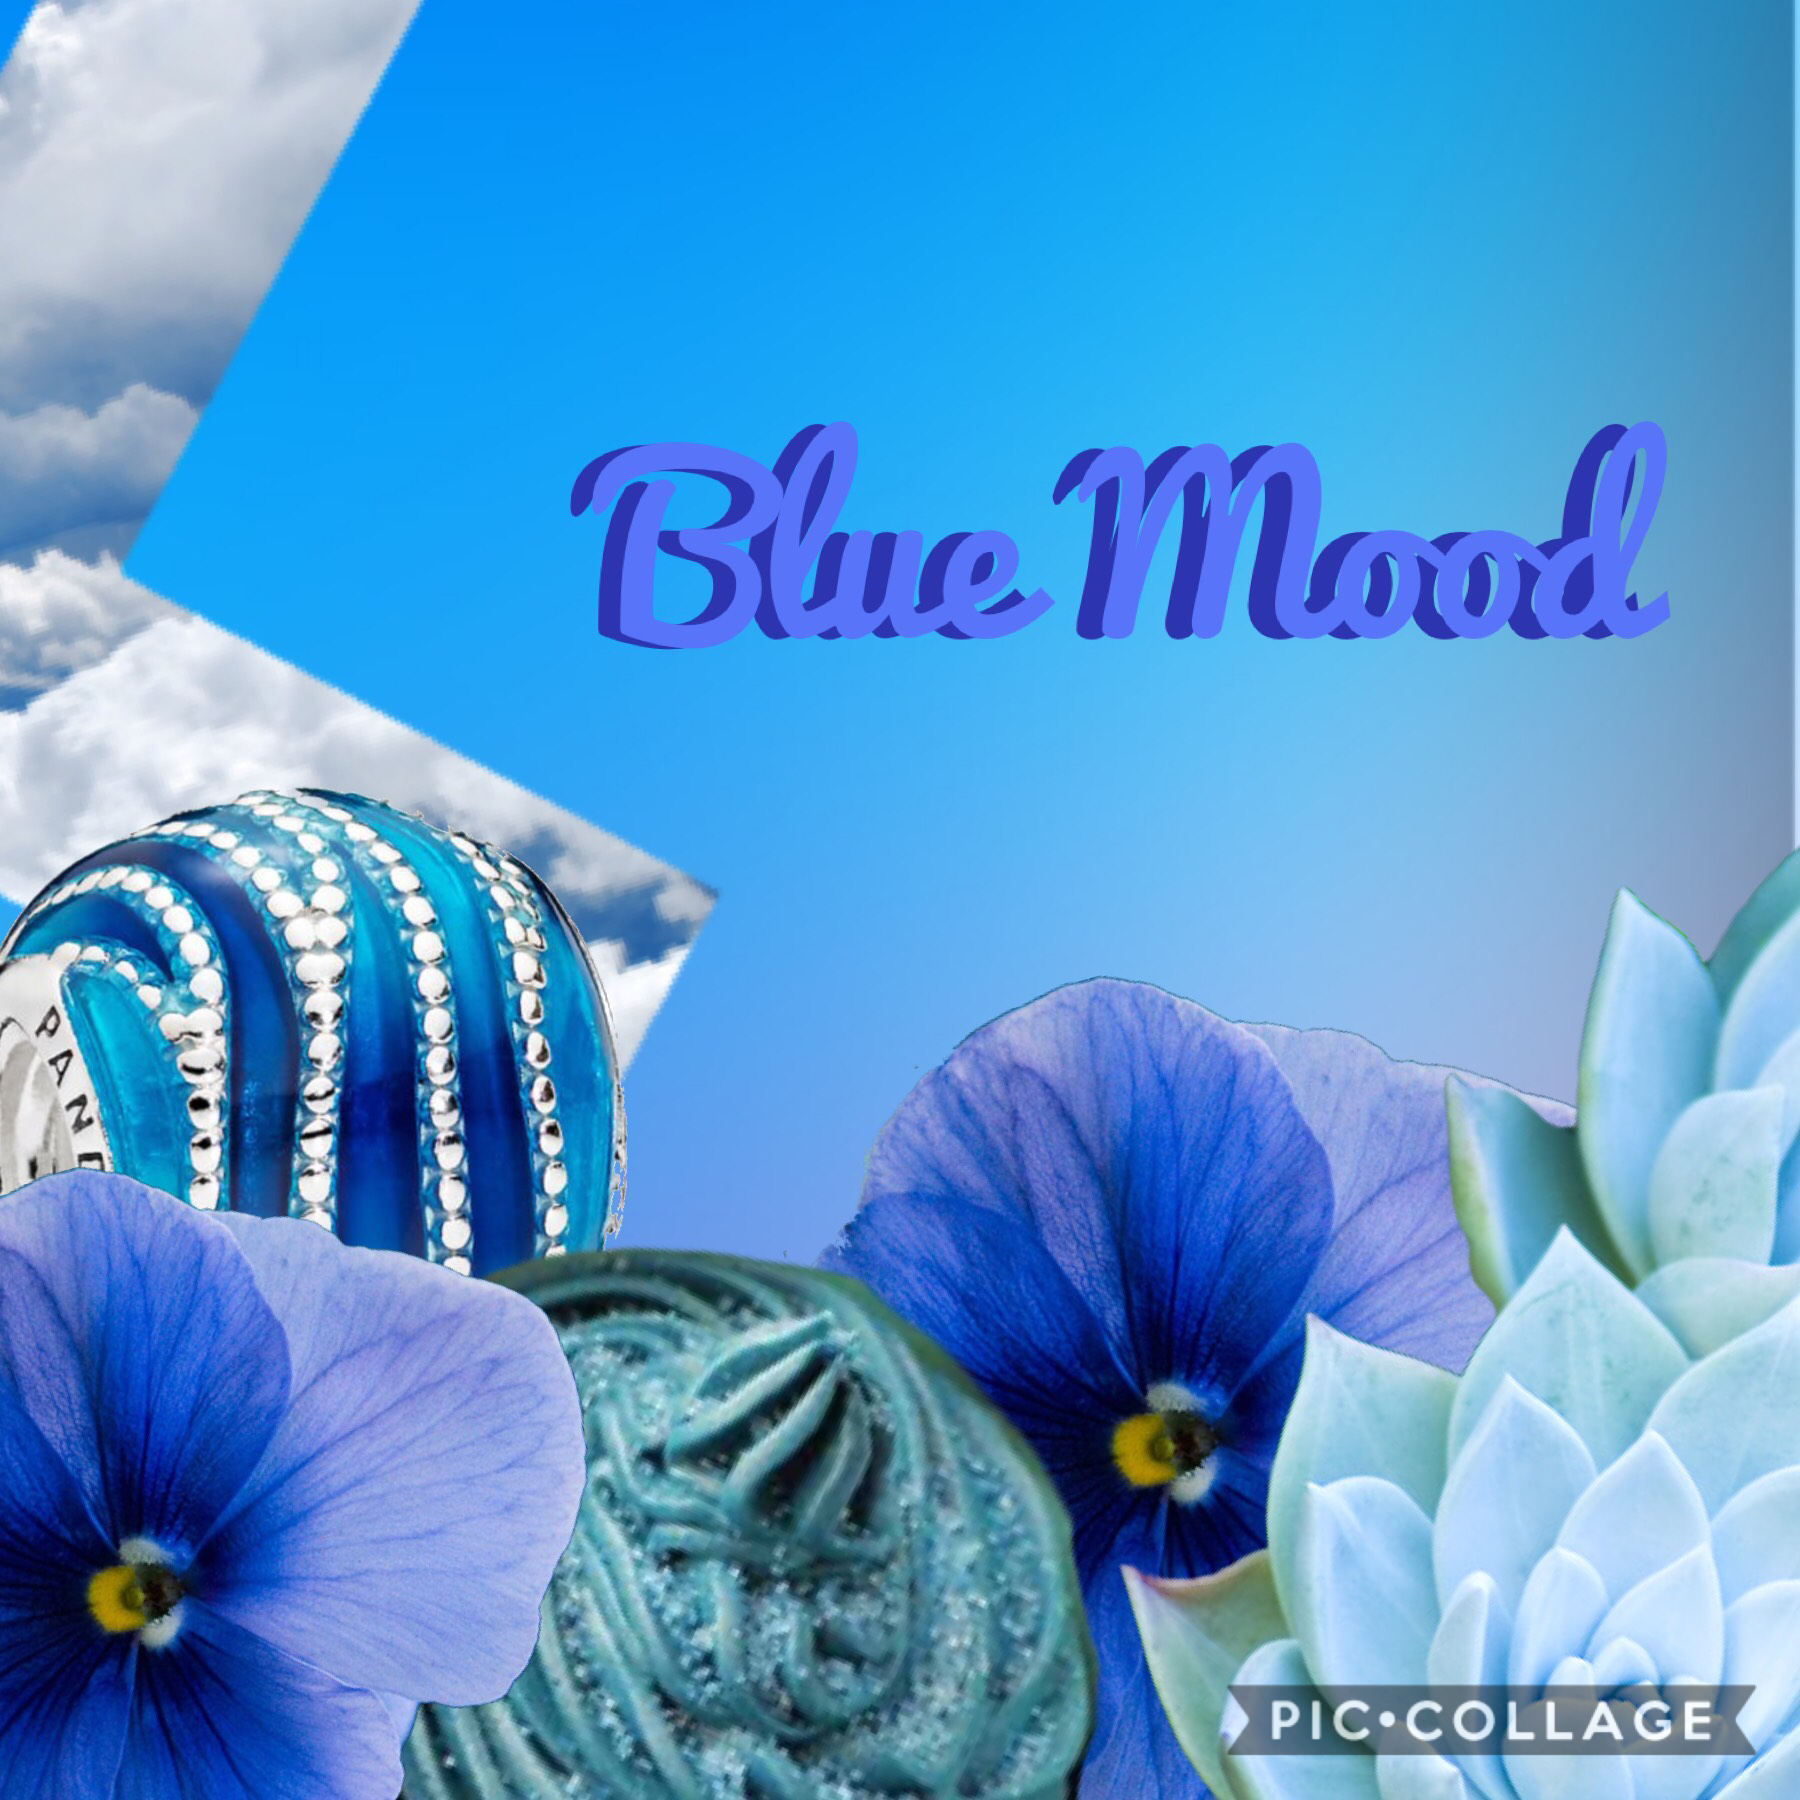 Sad..... blue mood today....